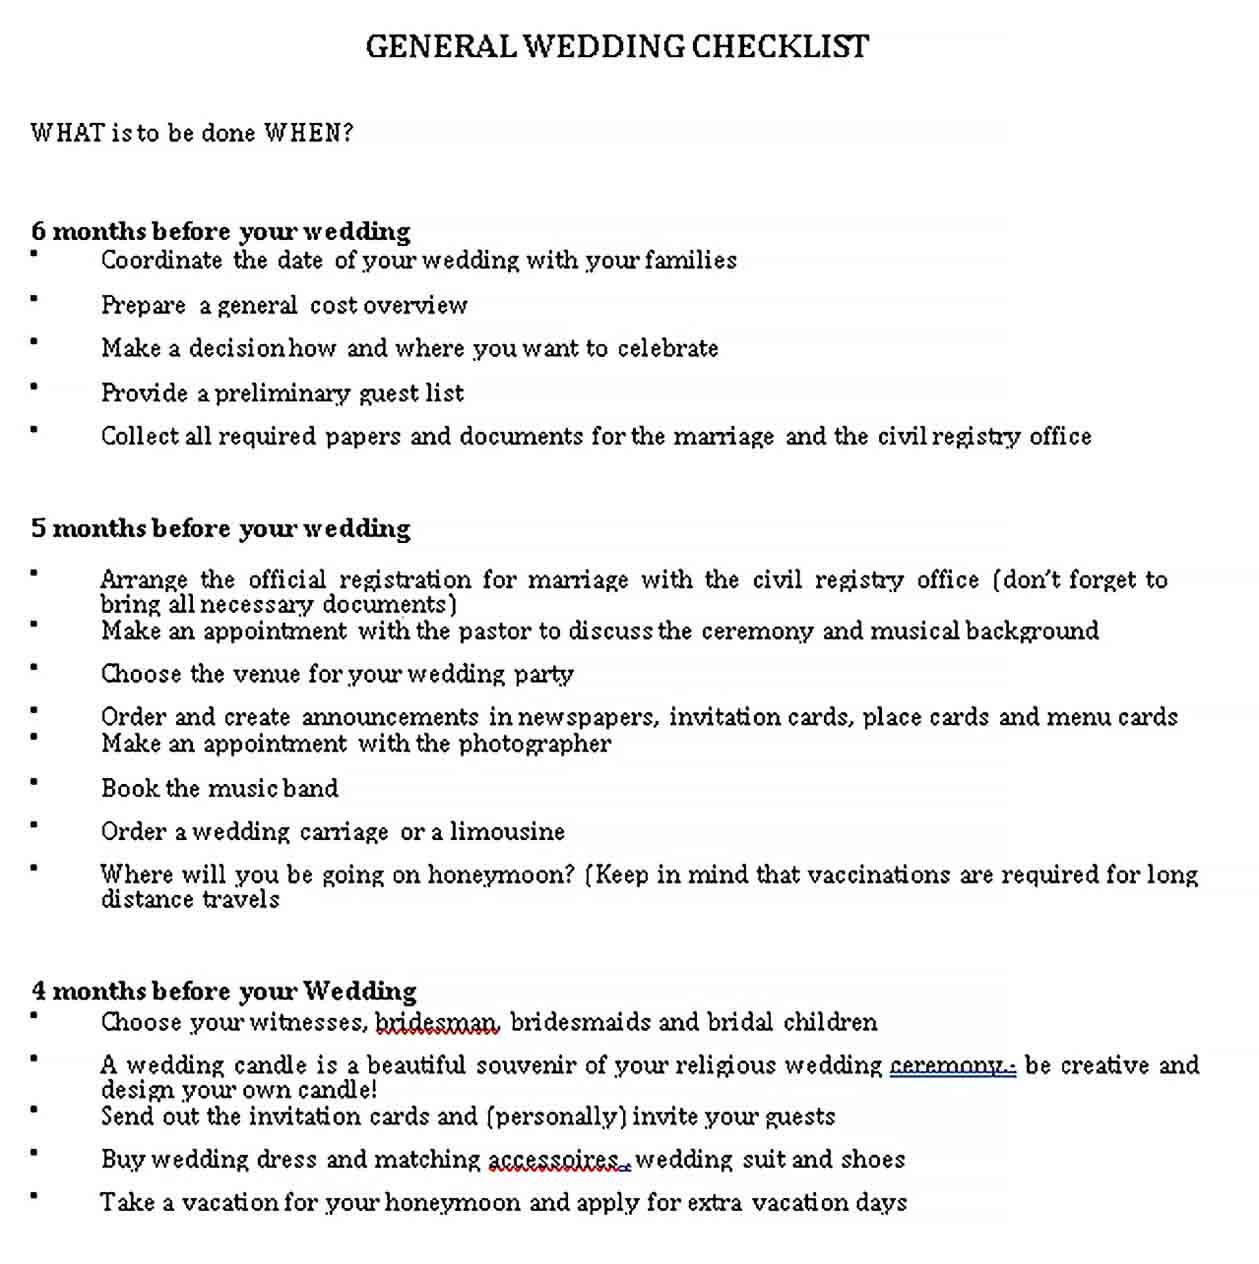 Sample General Wedding Checklist